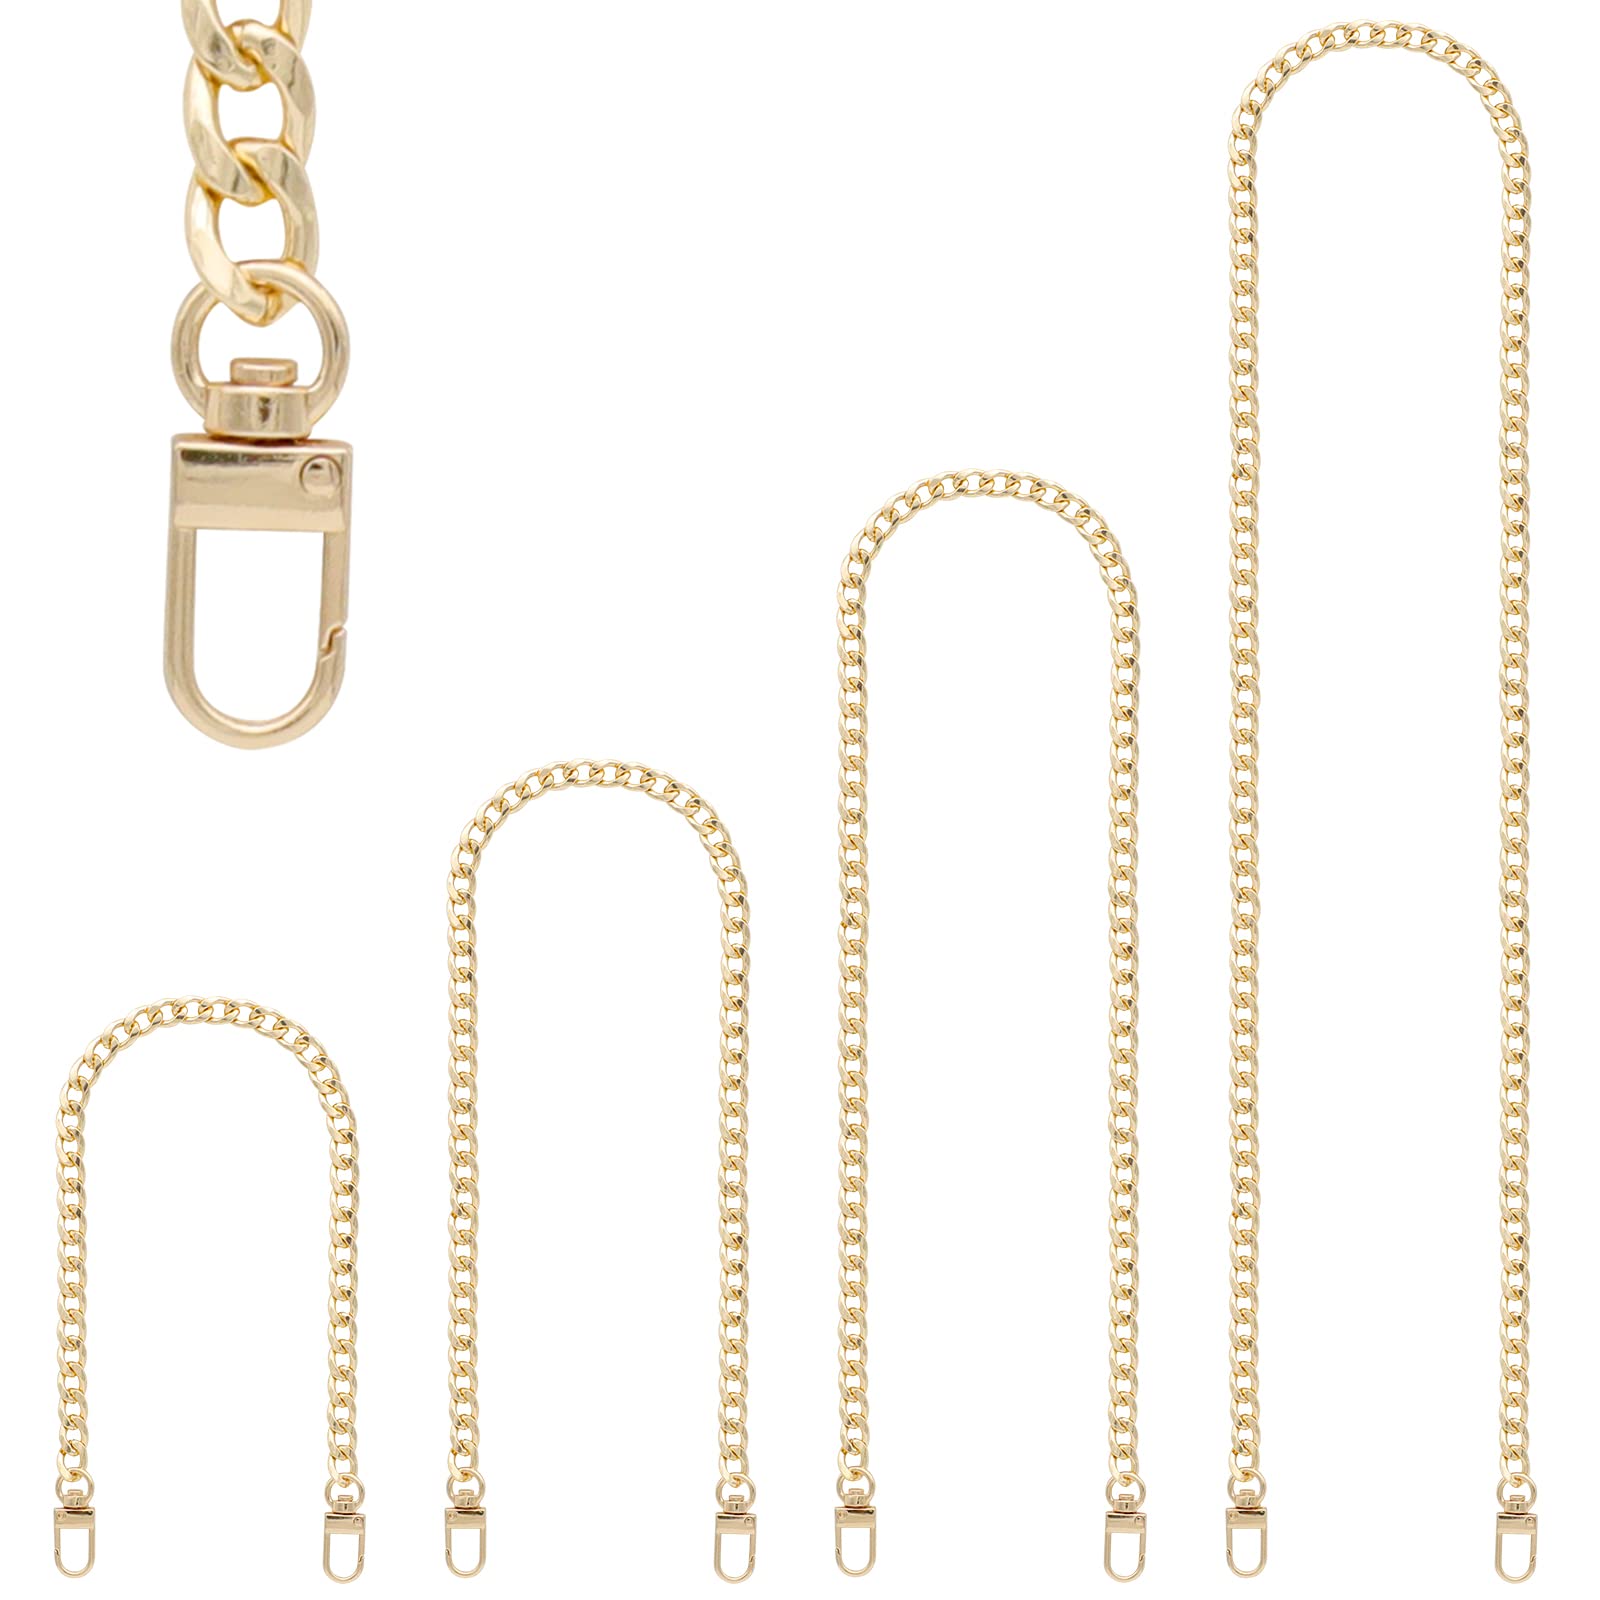 Shoulder strap metal chain gold